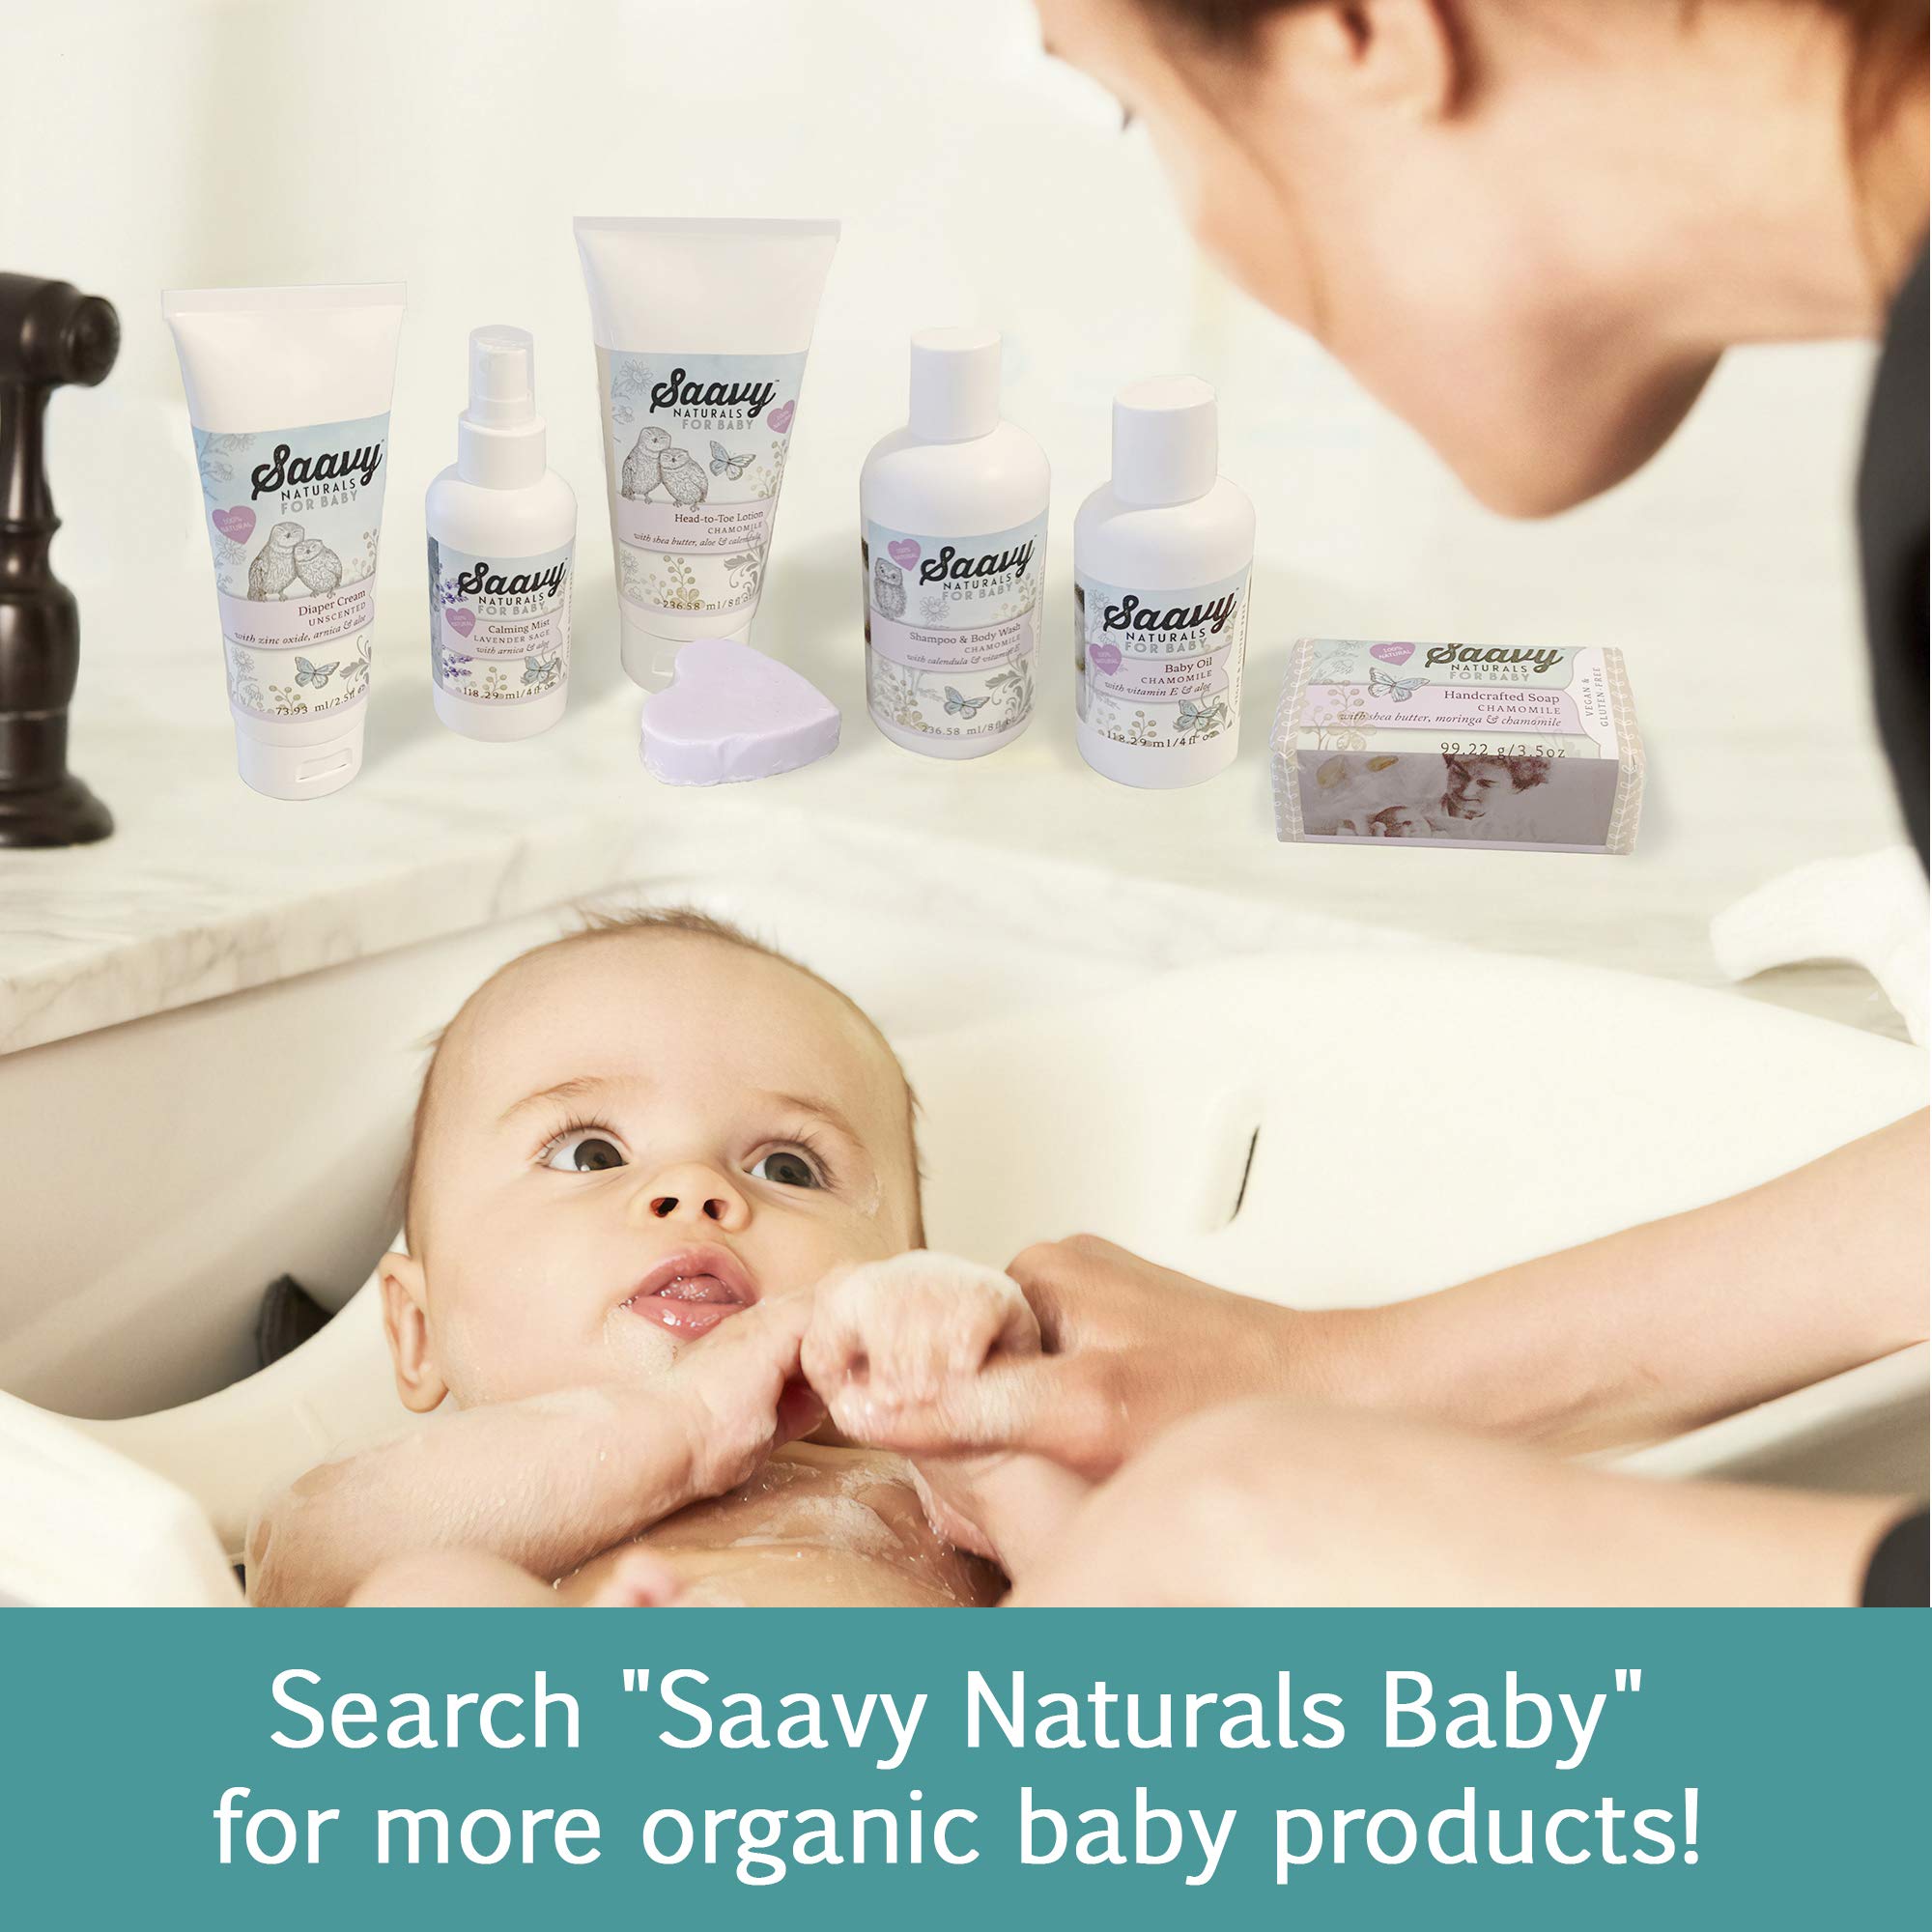 Saavy Naturals Organic Chamomile Baby Shampoo and Body Wash Set, Calendula and Vitamine E, Gentle Head to Toe Skin Care for Infant Bath Time, 8oz Per Bottle